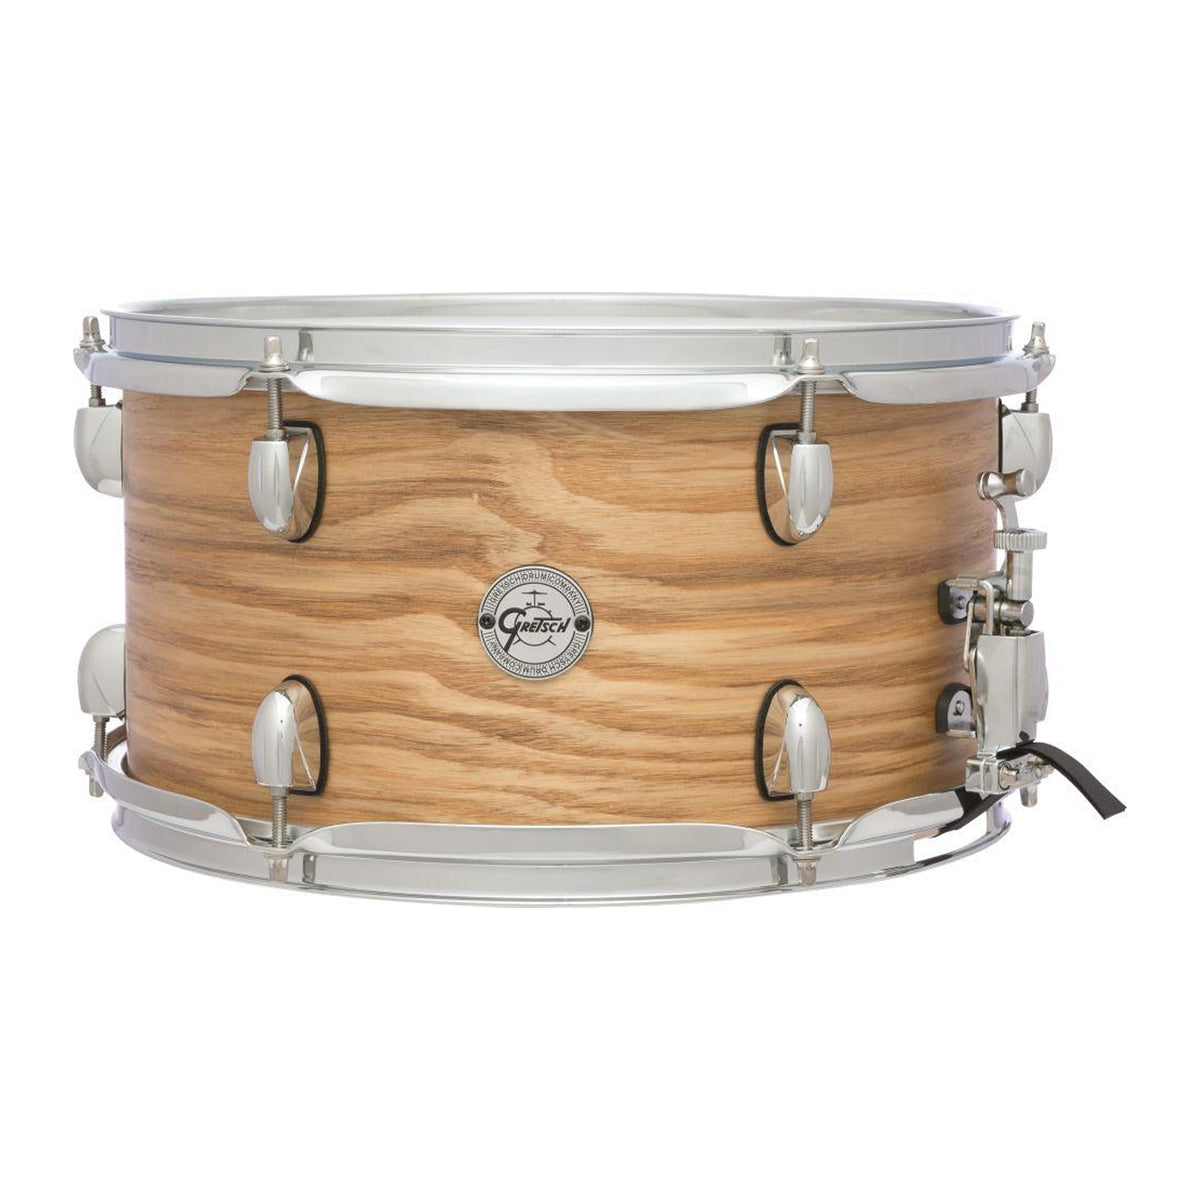 Gretsch "Full Range" 13"x7" Ash Snare Drum in Natural